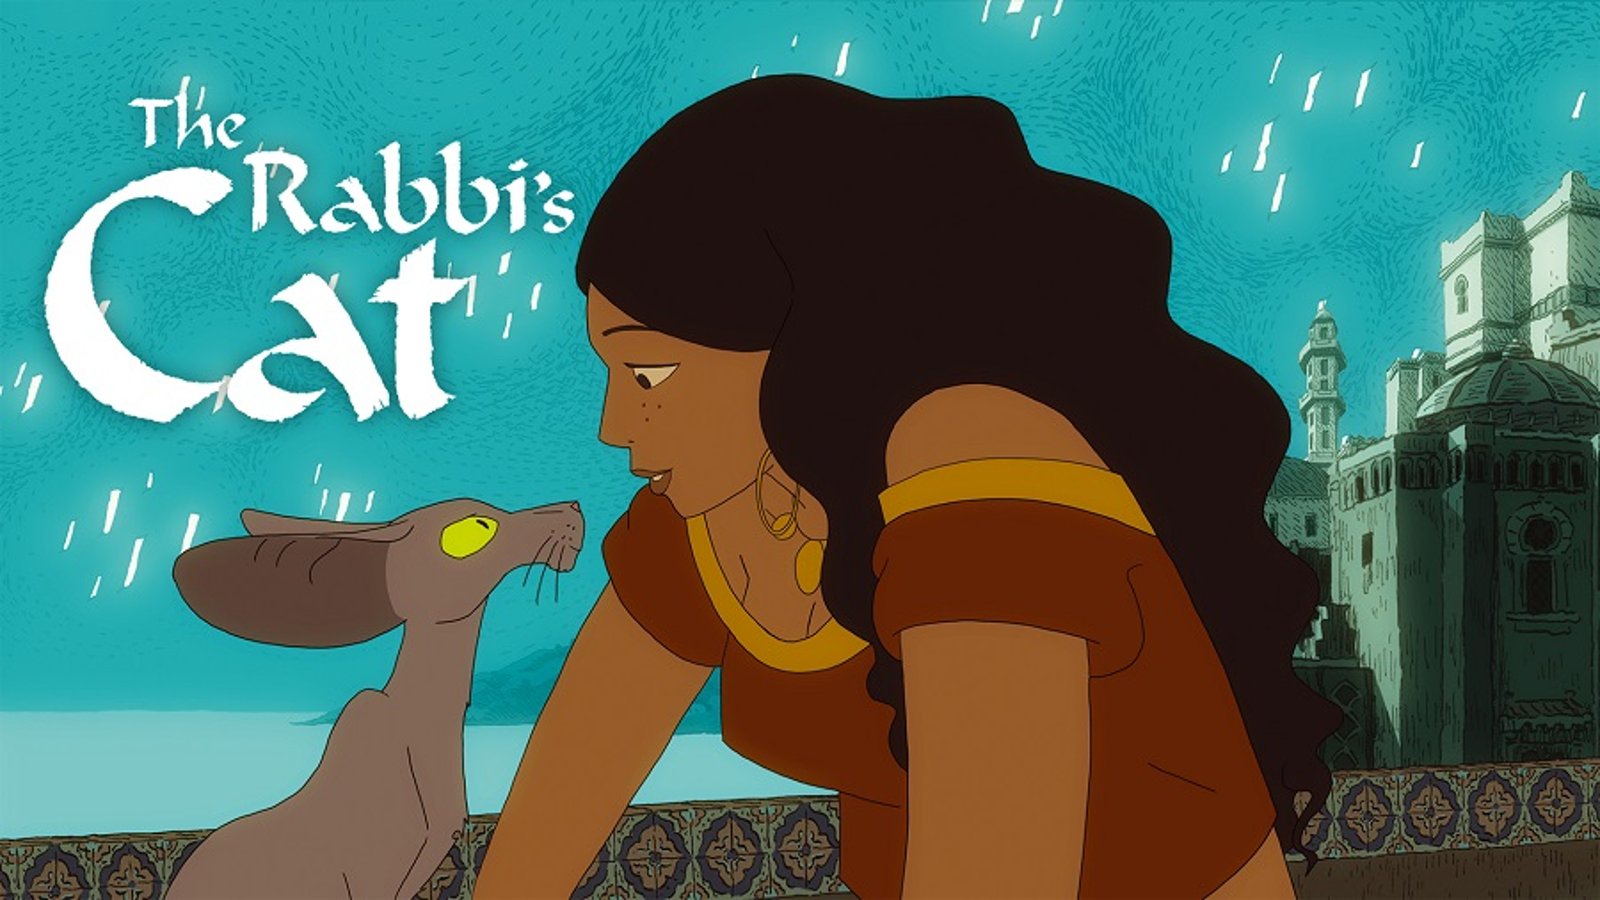 The Rabbi's Cat - Le chat du rabbin